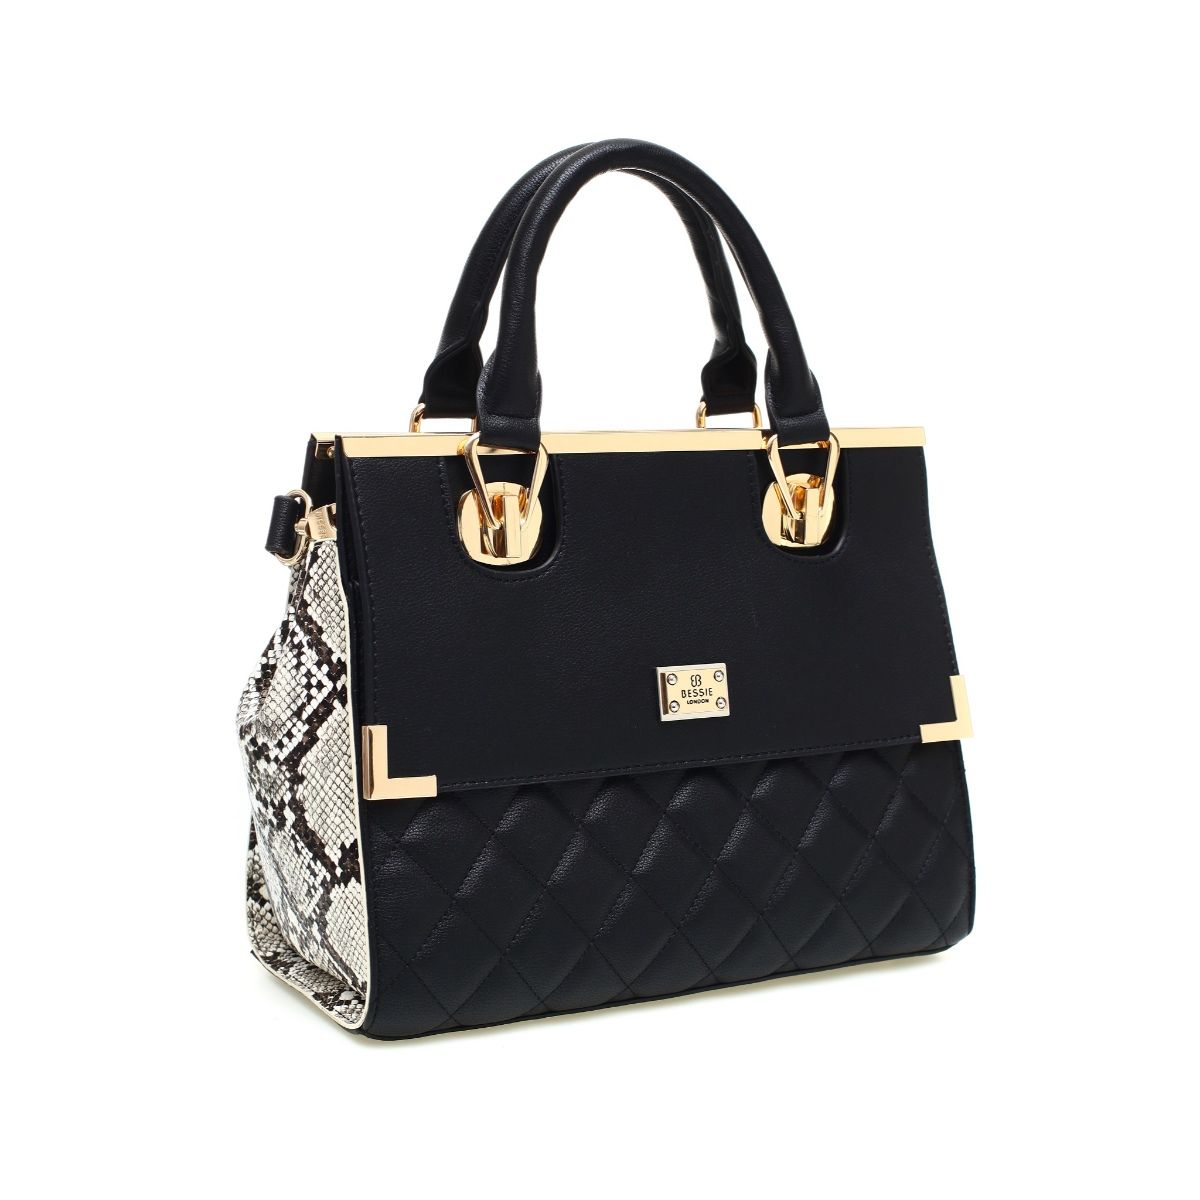 Bessie London Classic 'Retro' Button Shoulder/Handbag - Twenty Two Gifts,  Handbags and Accessories